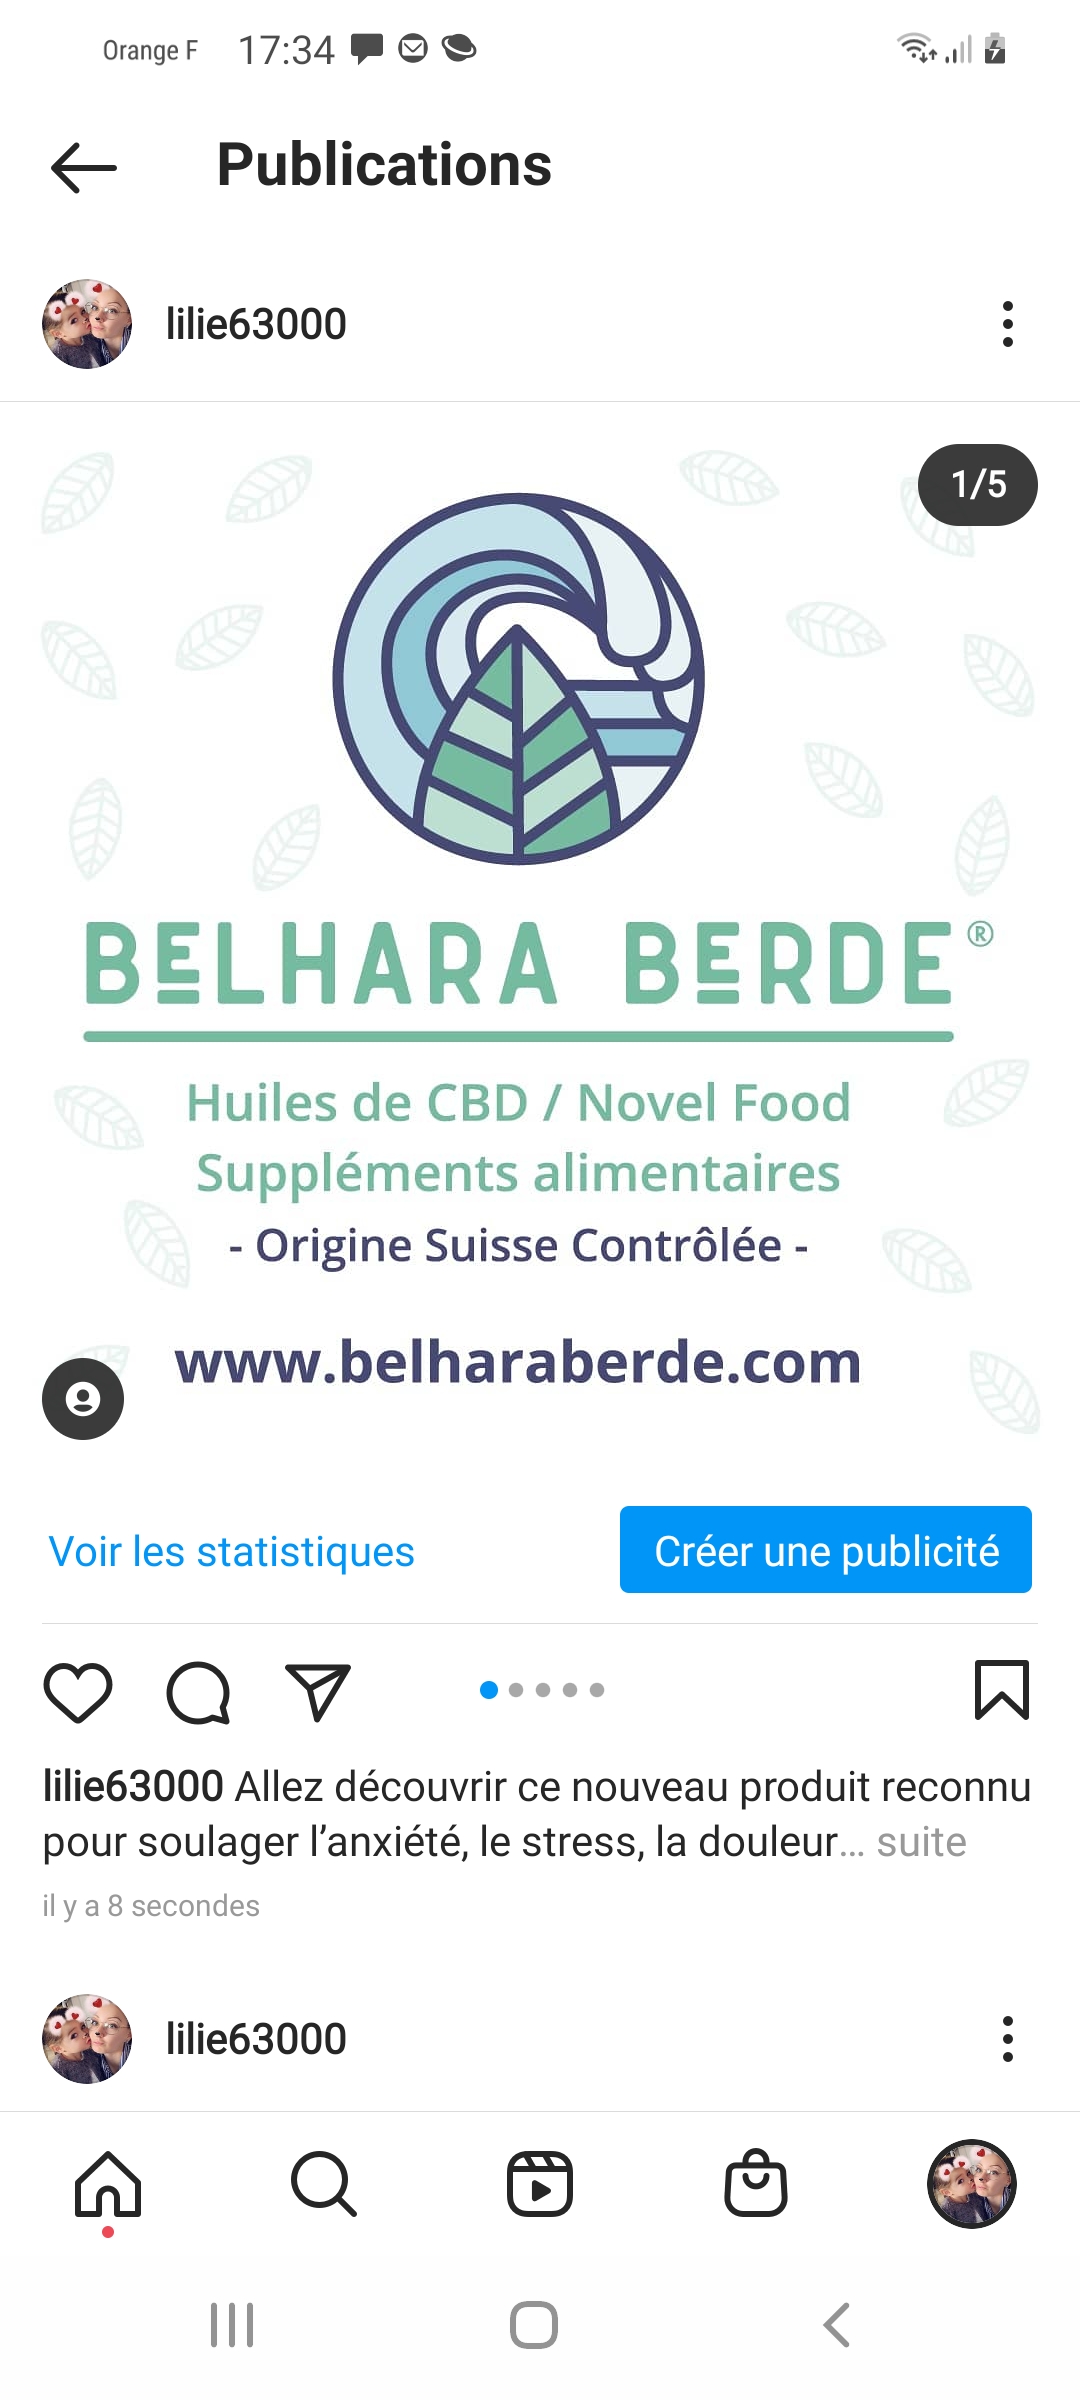 Promotion de la marque Belhara Berde